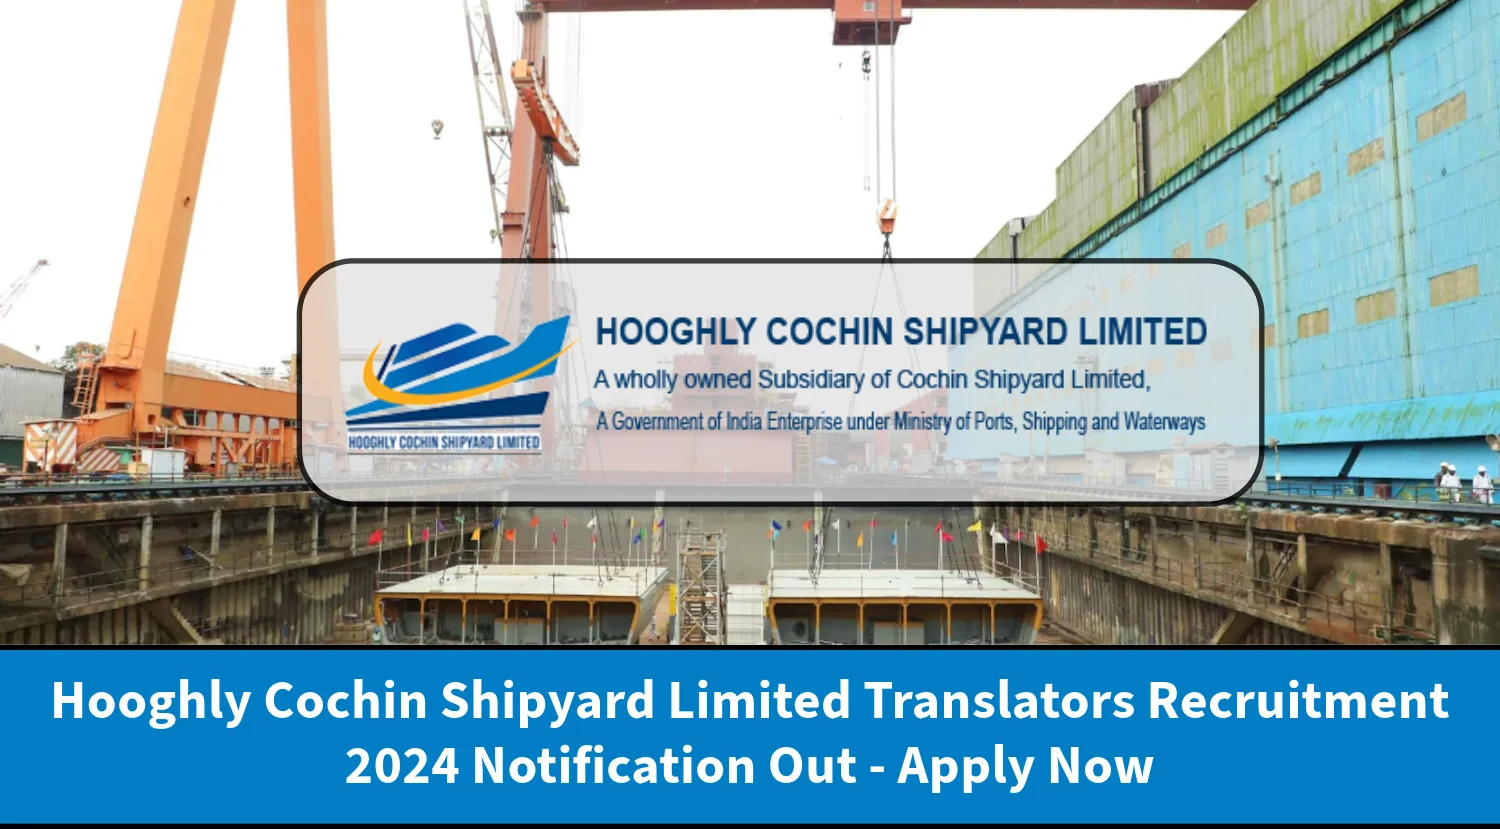 Hooghly Cochin Shipyard Limited Translators Recruitment 2024